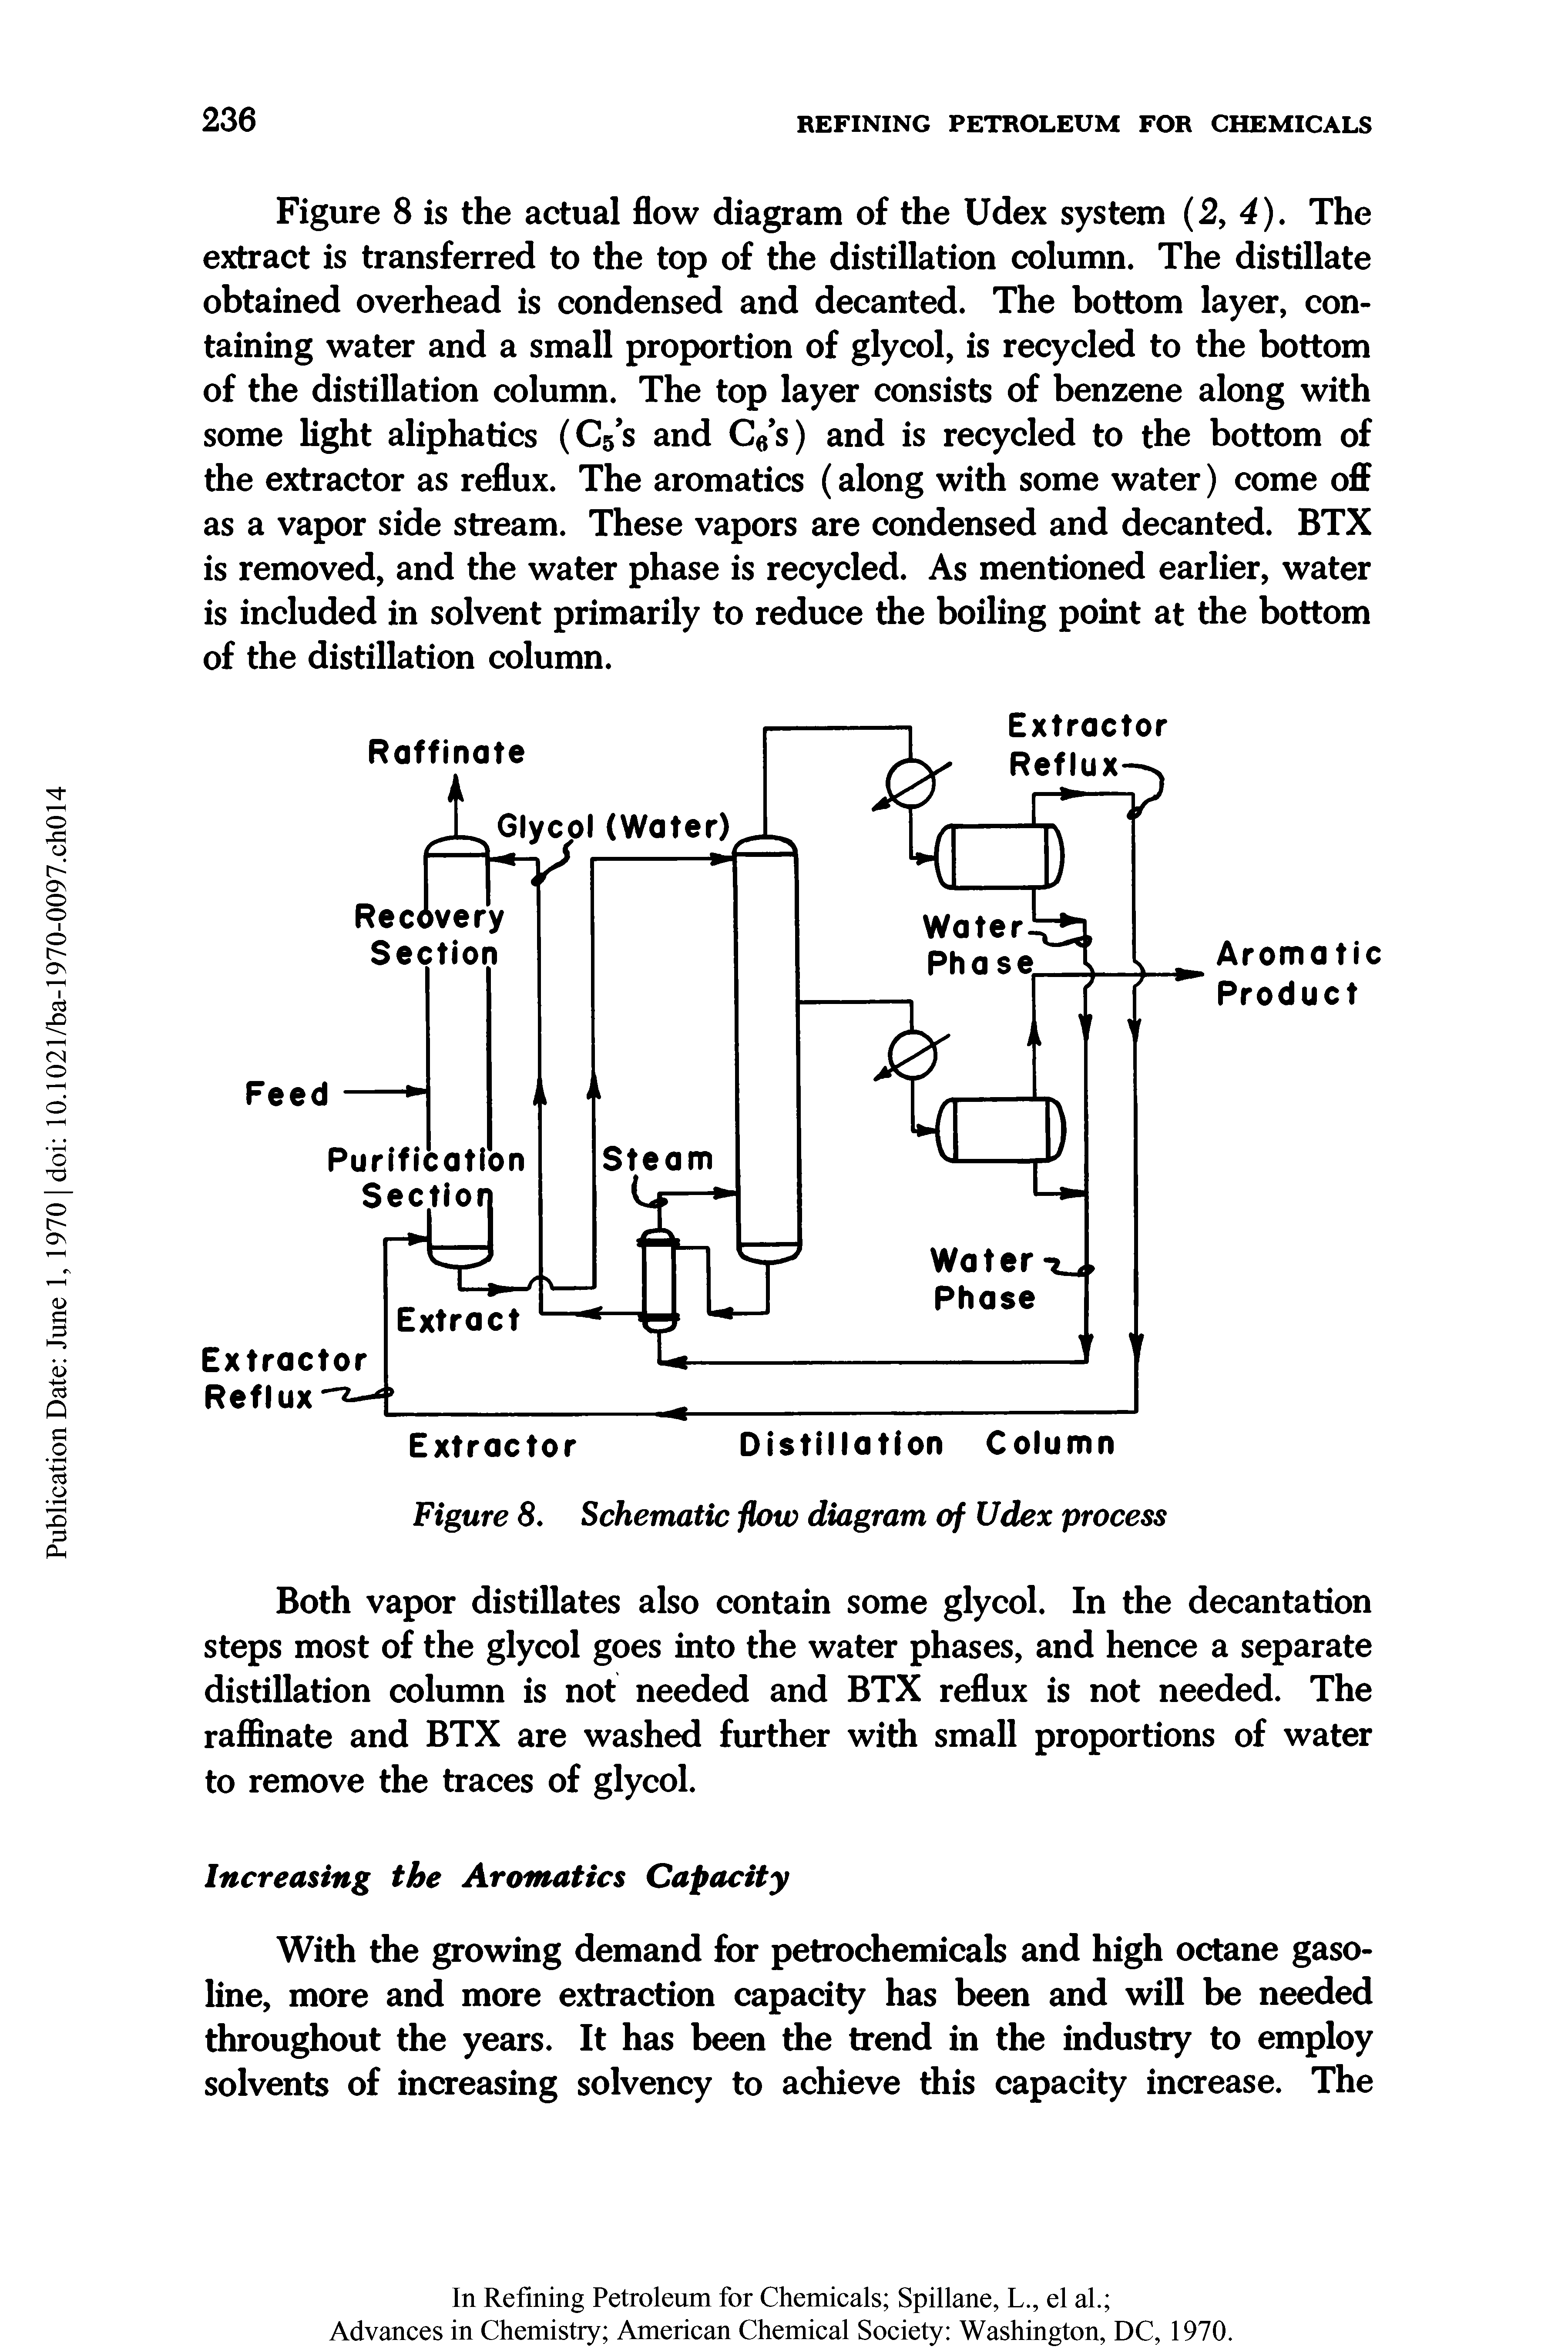 Figure 8. Schematic flow diagram of Udex process...